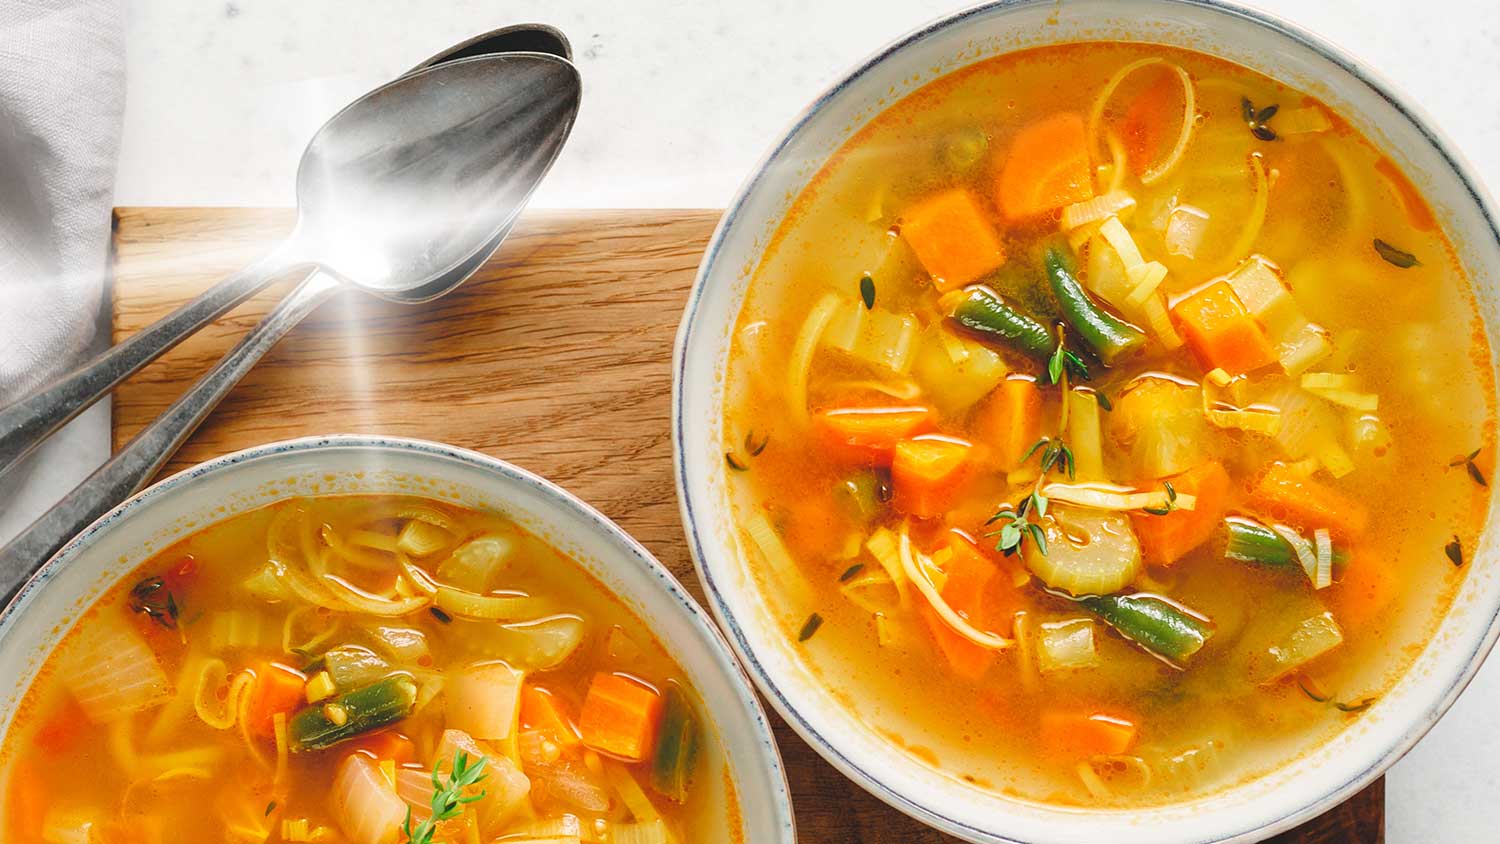 Vegetable soup in bowls